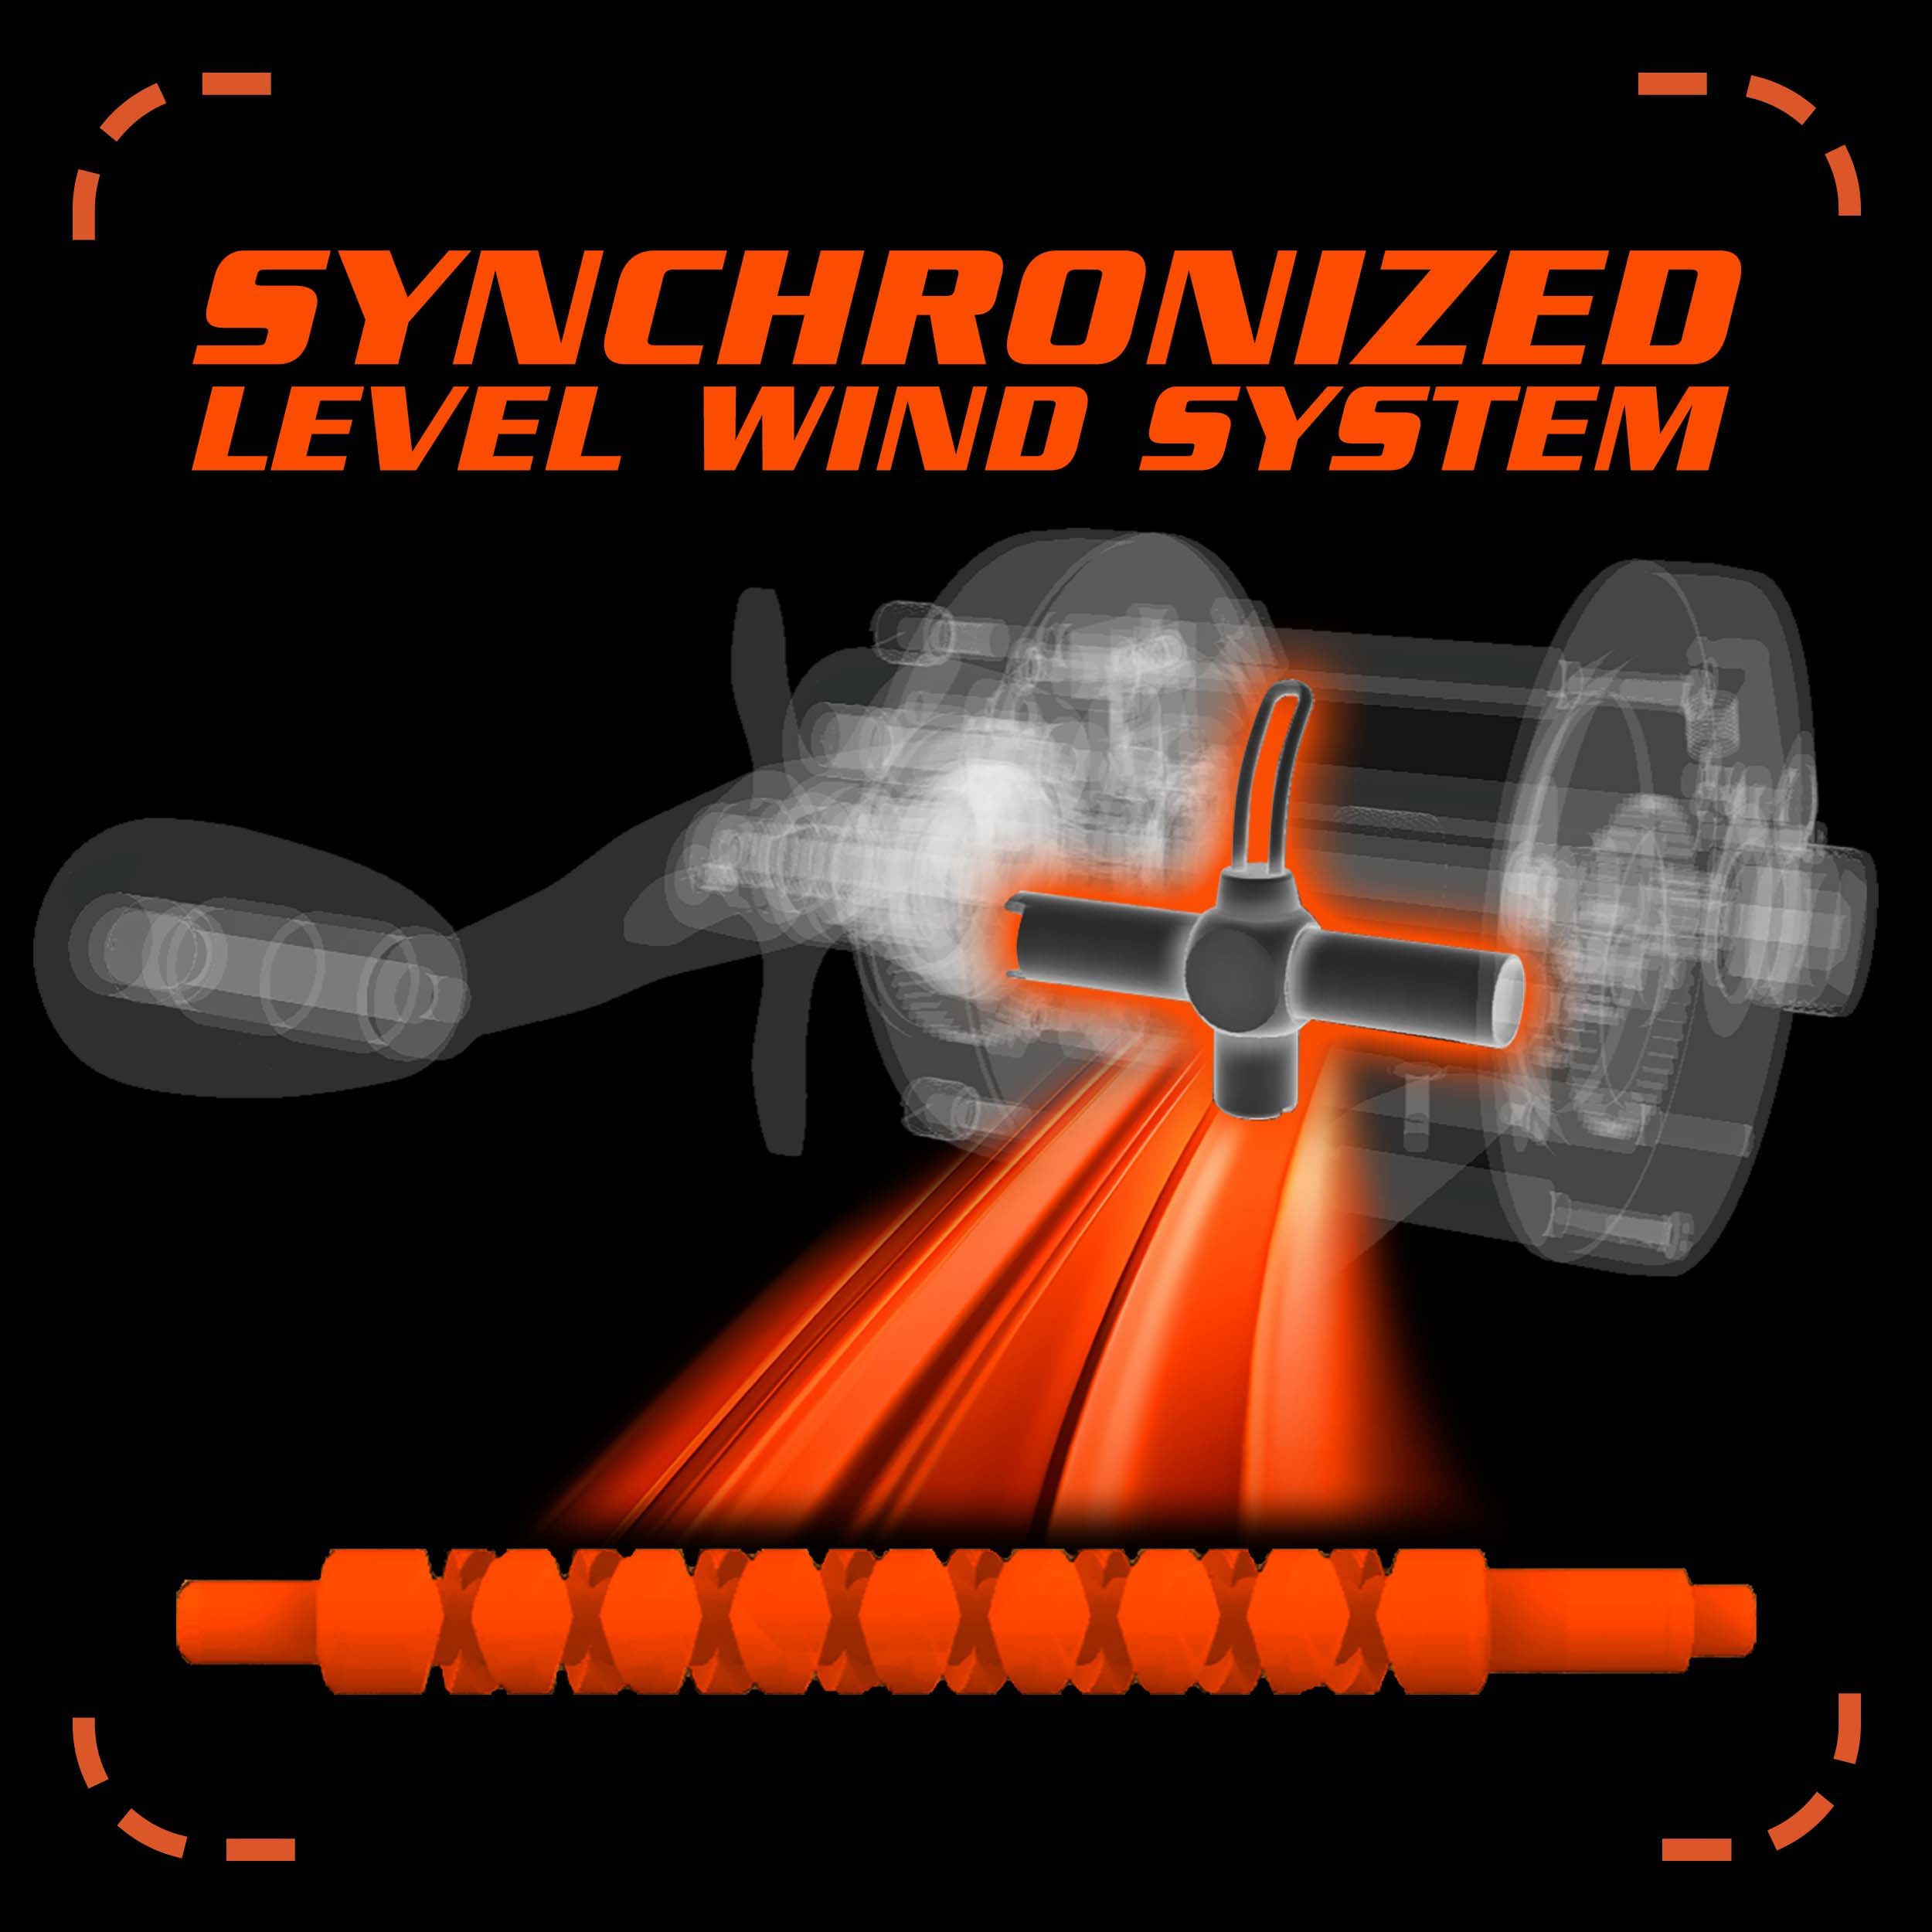 Synchronized level wind system